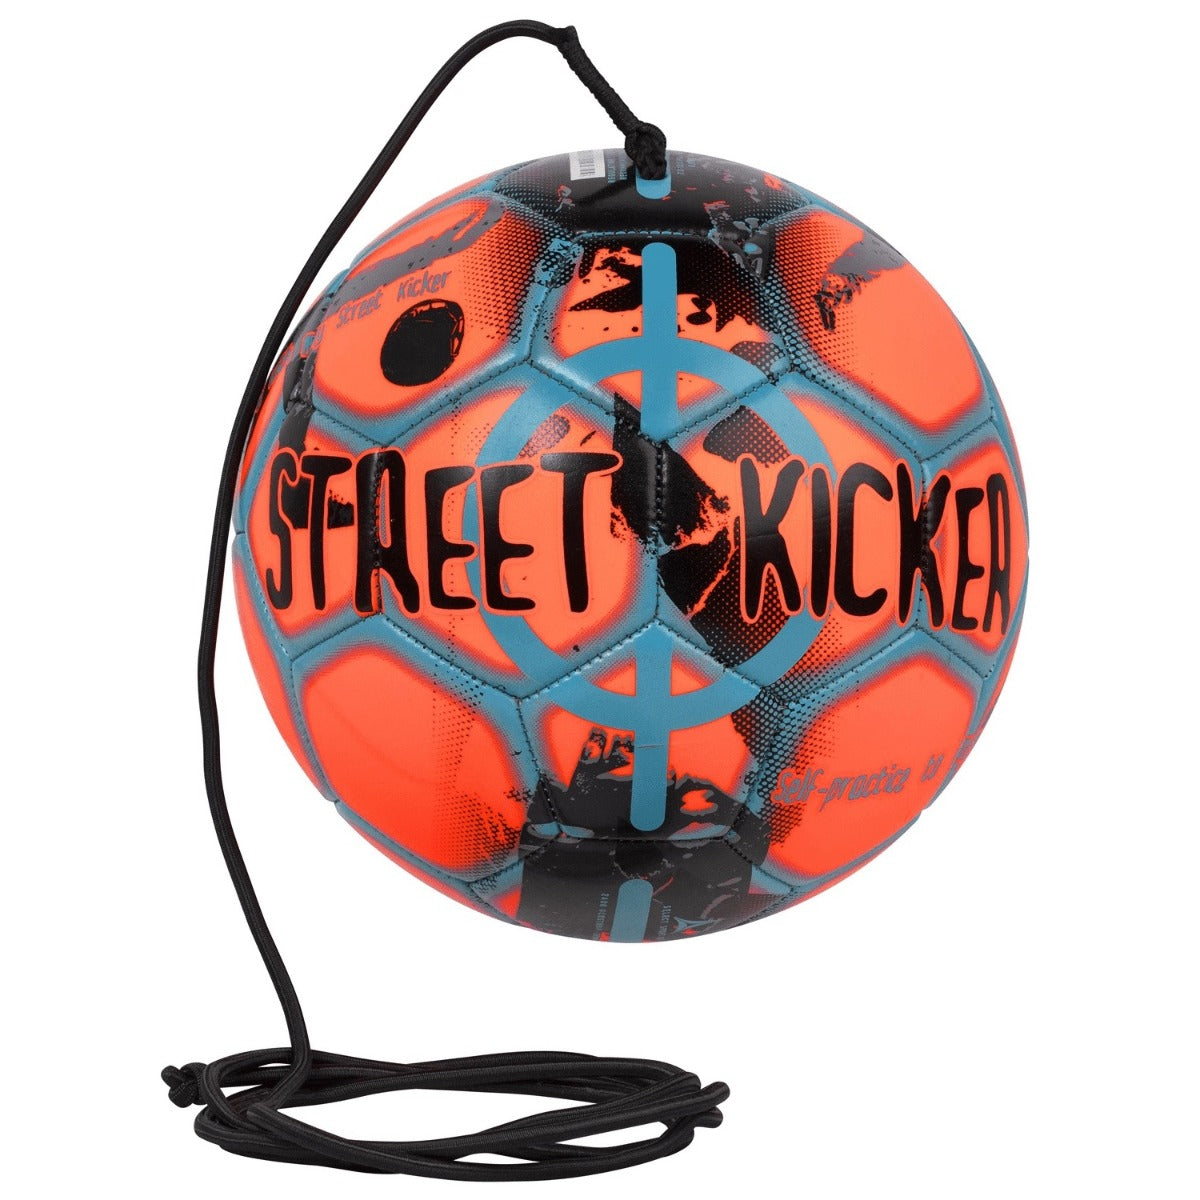 Select Street Kicker Ball - Orange